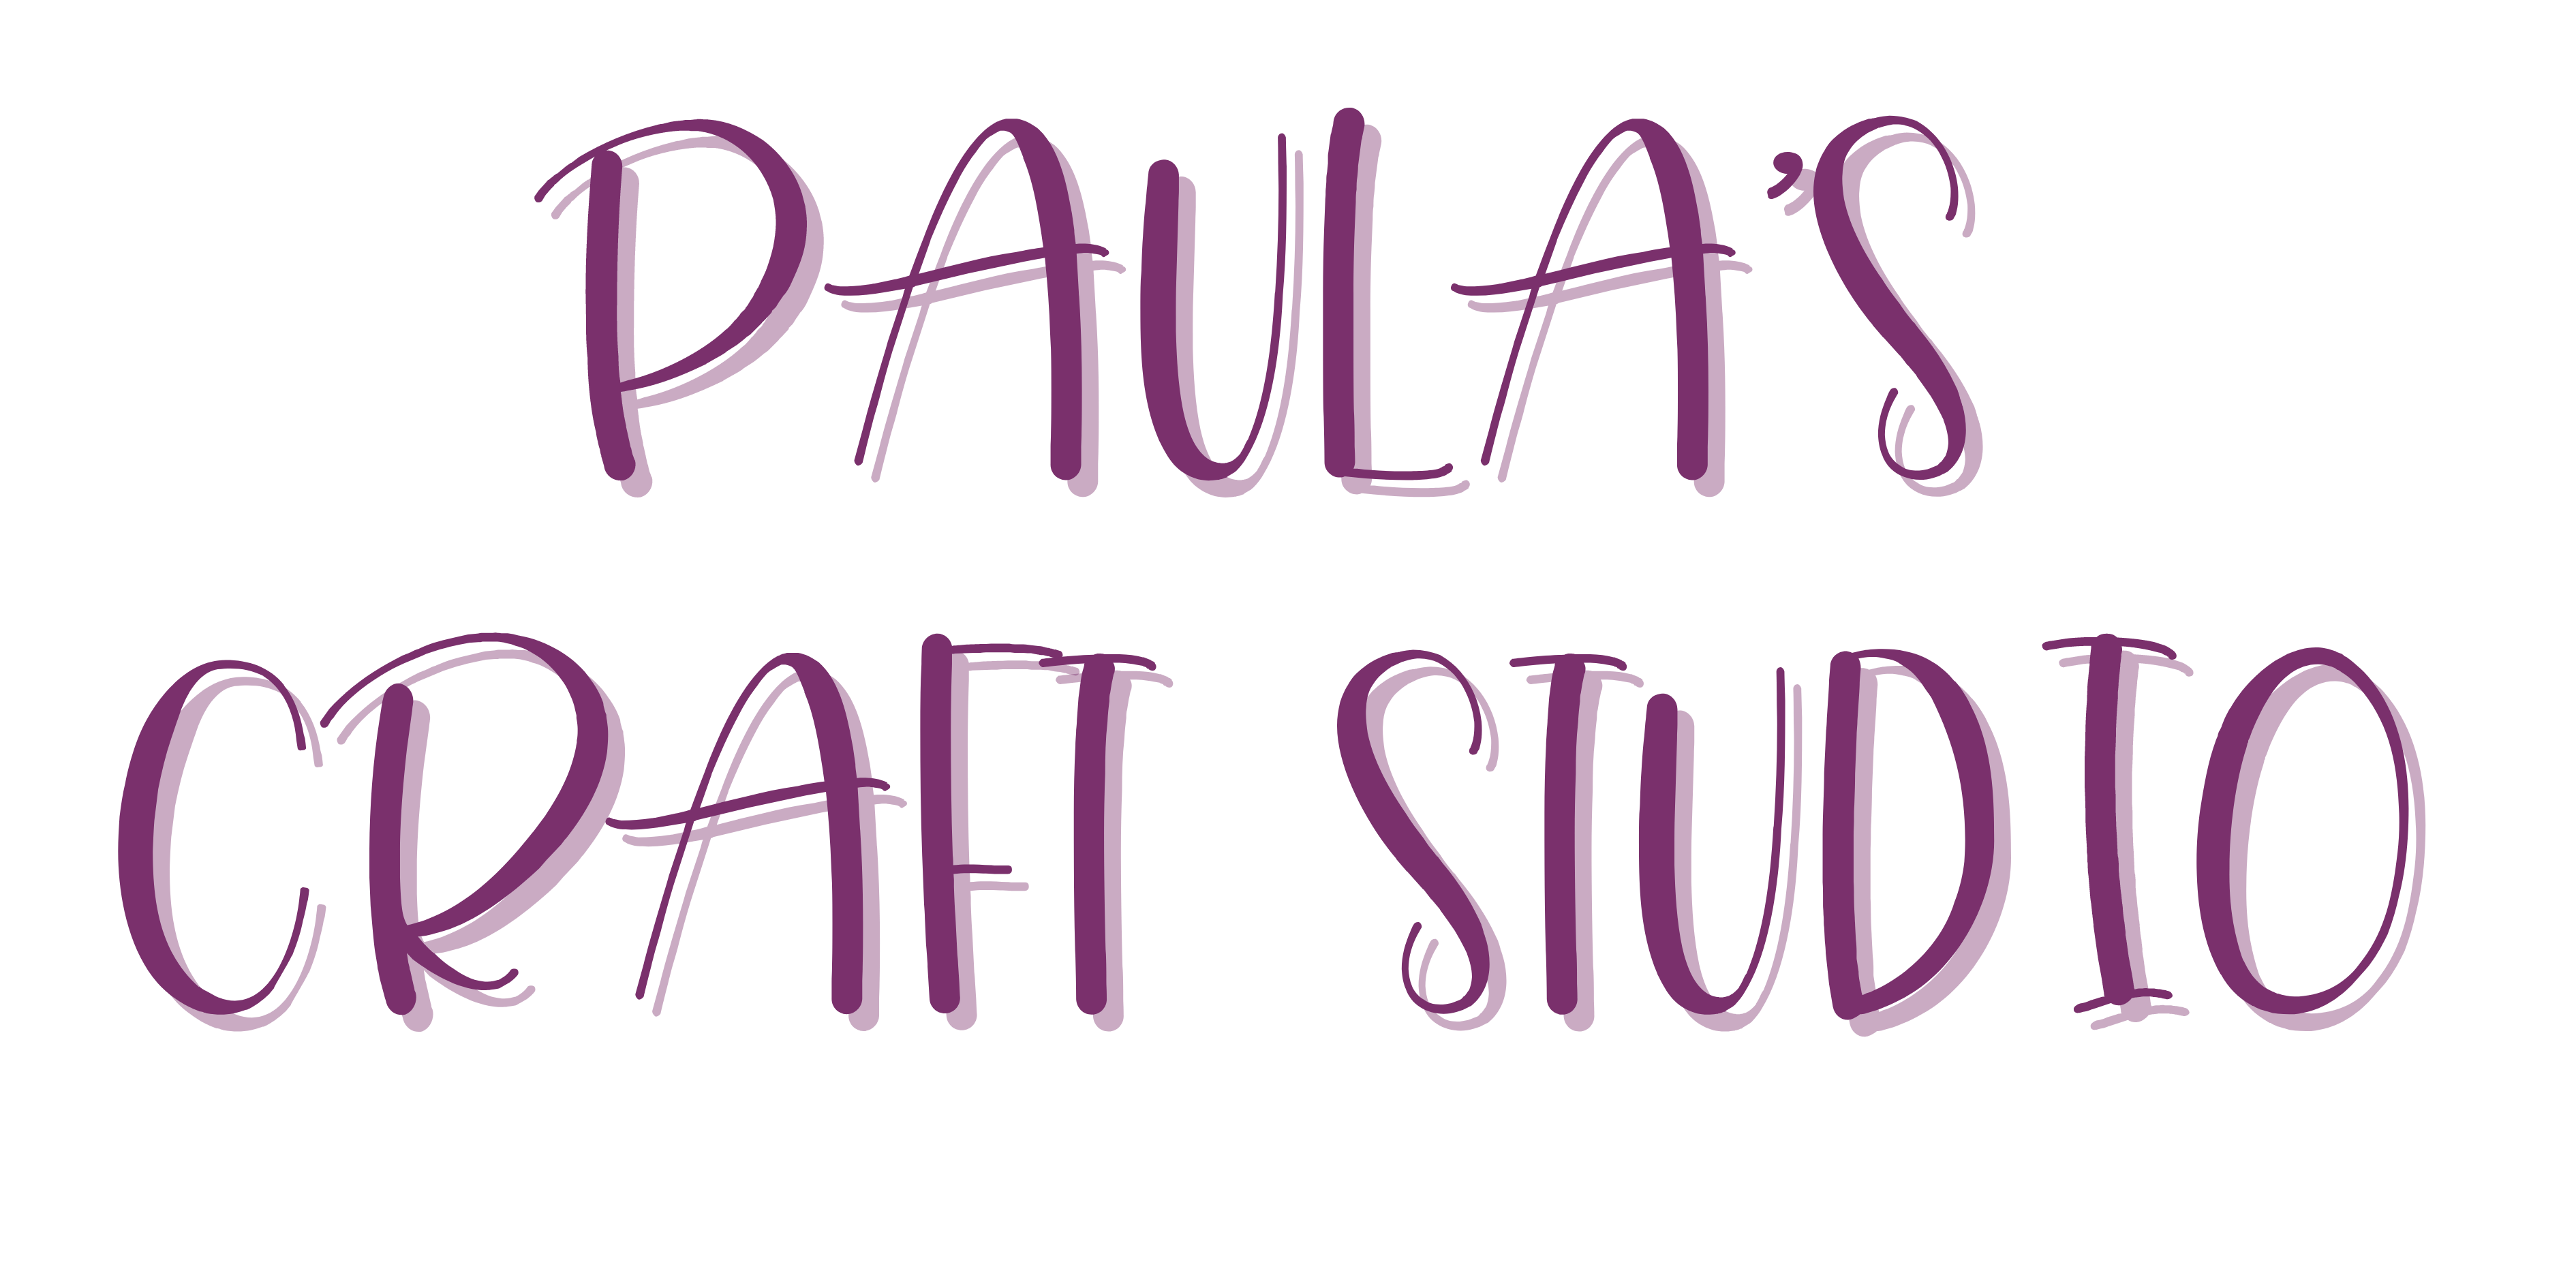 Paula's crafty studio